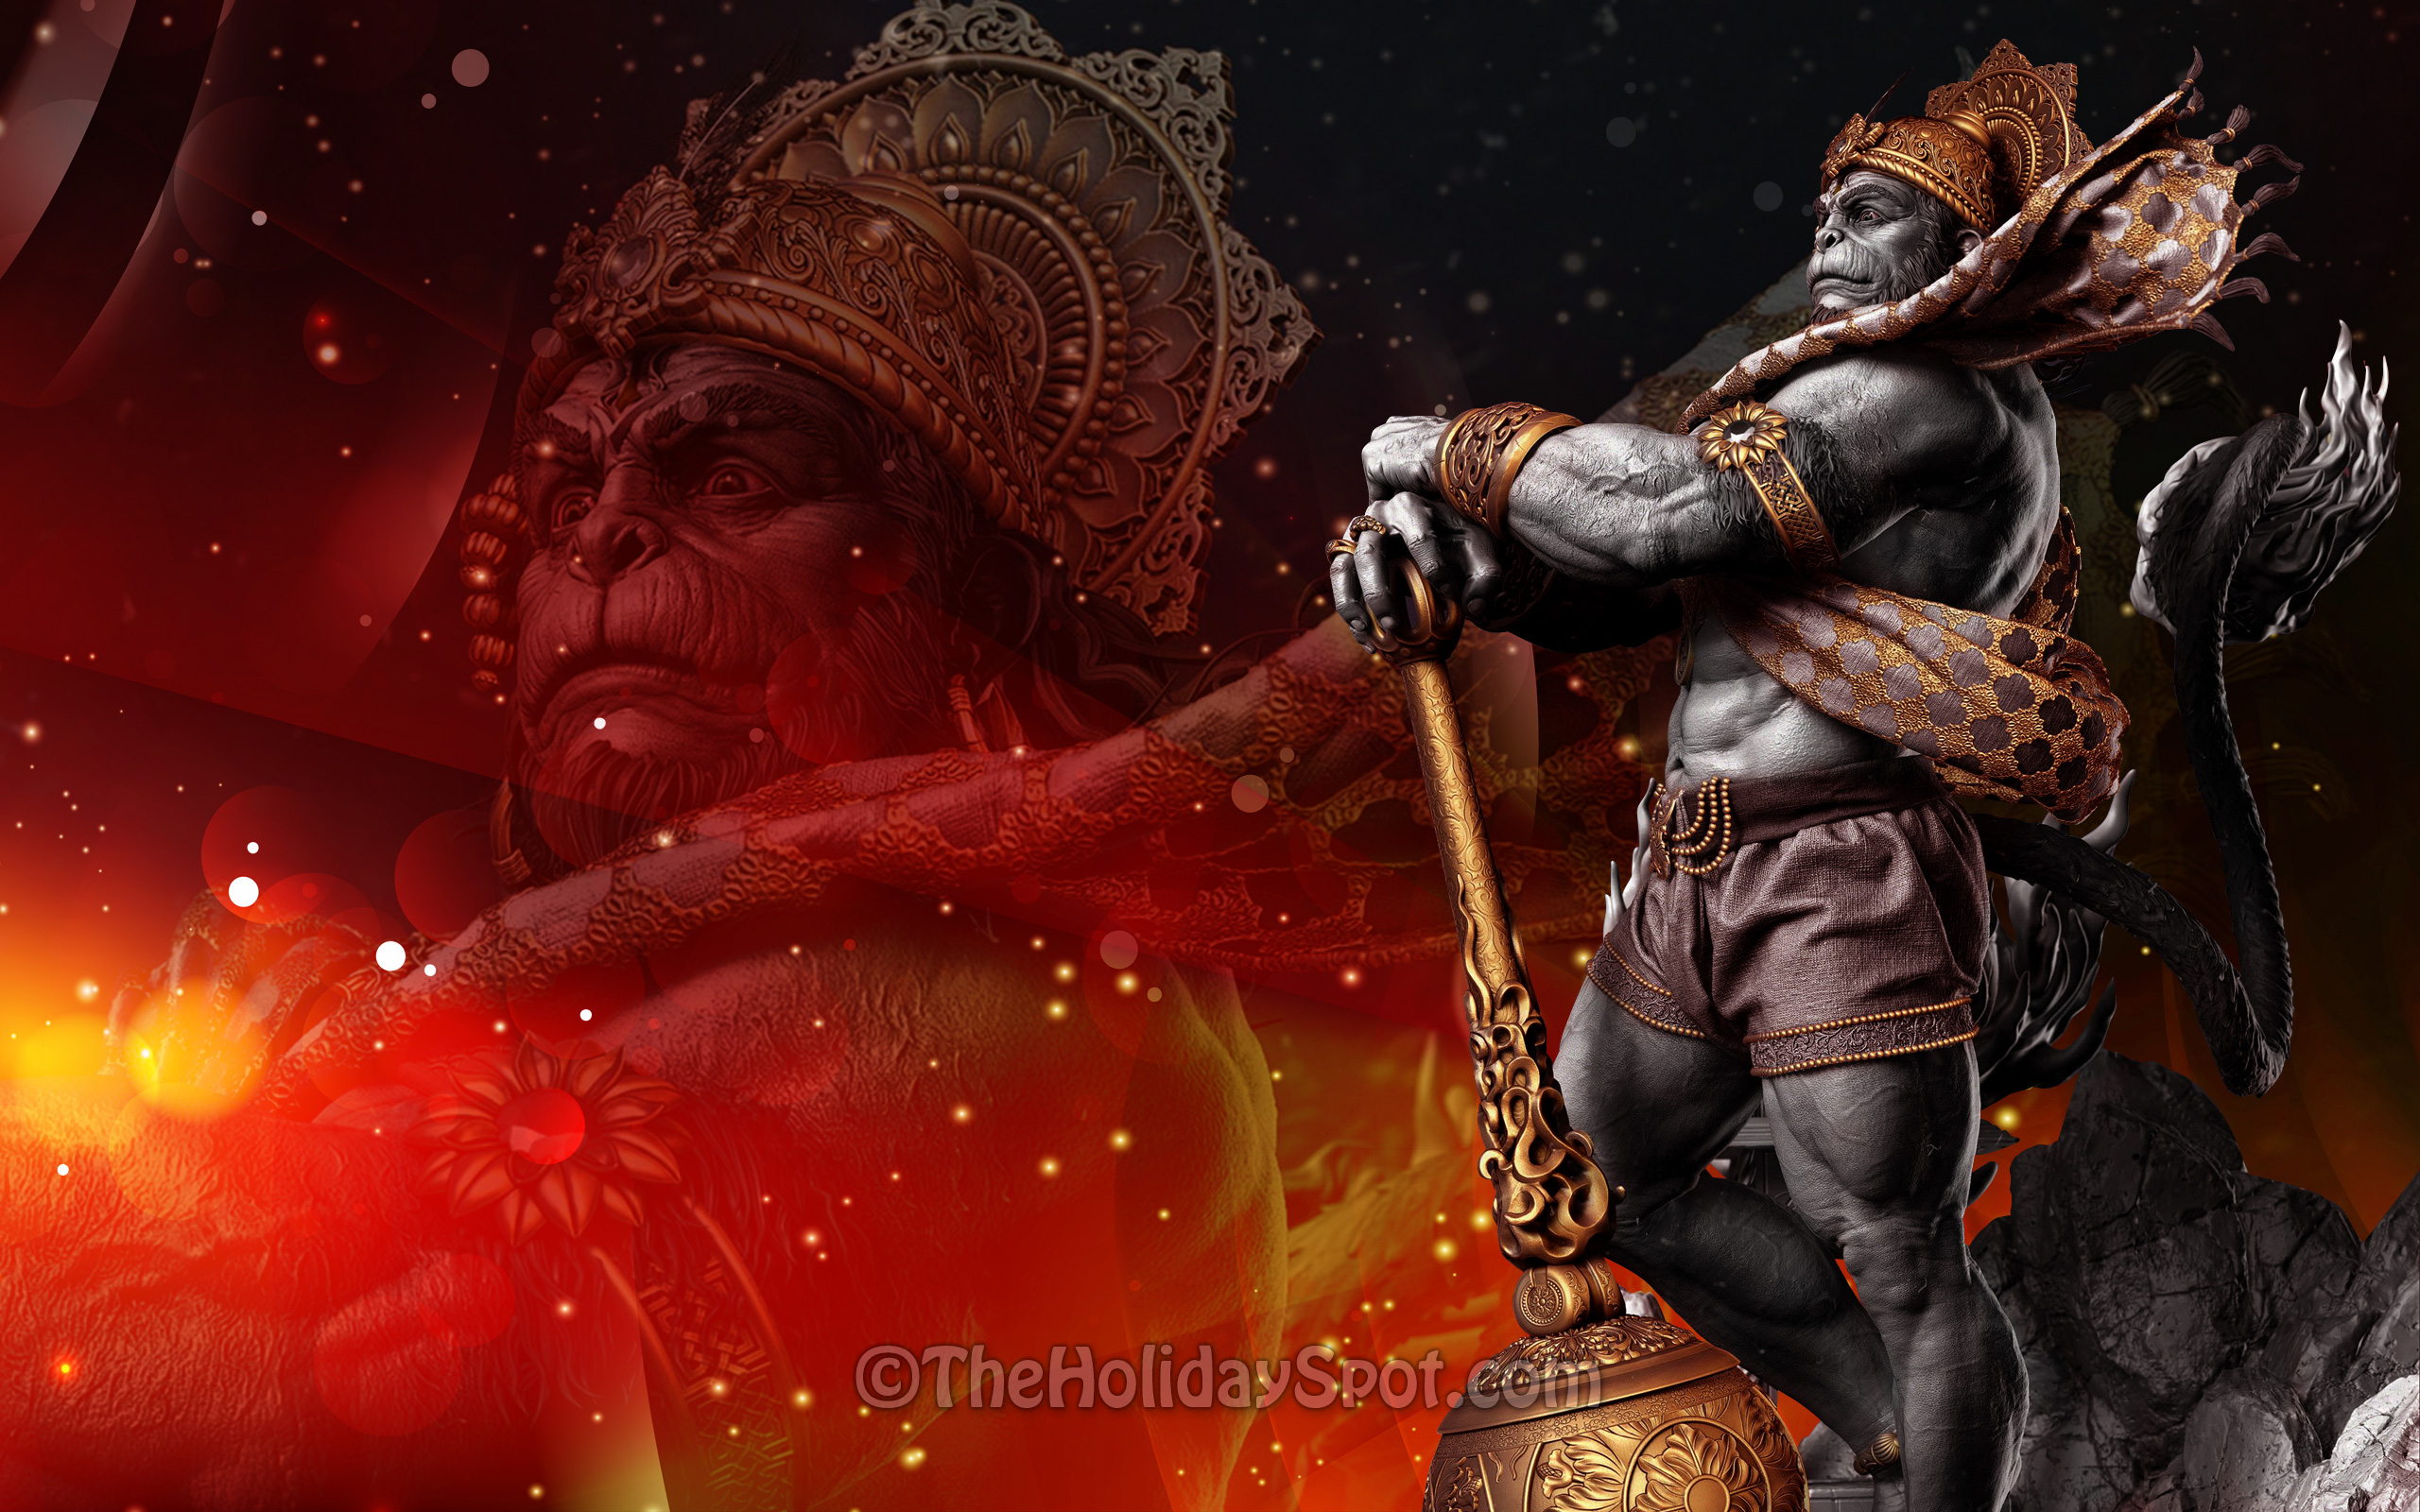 Lord Hanuman Images | Hanuman Jayanti HD Wallpapers | Hanuman HD Images